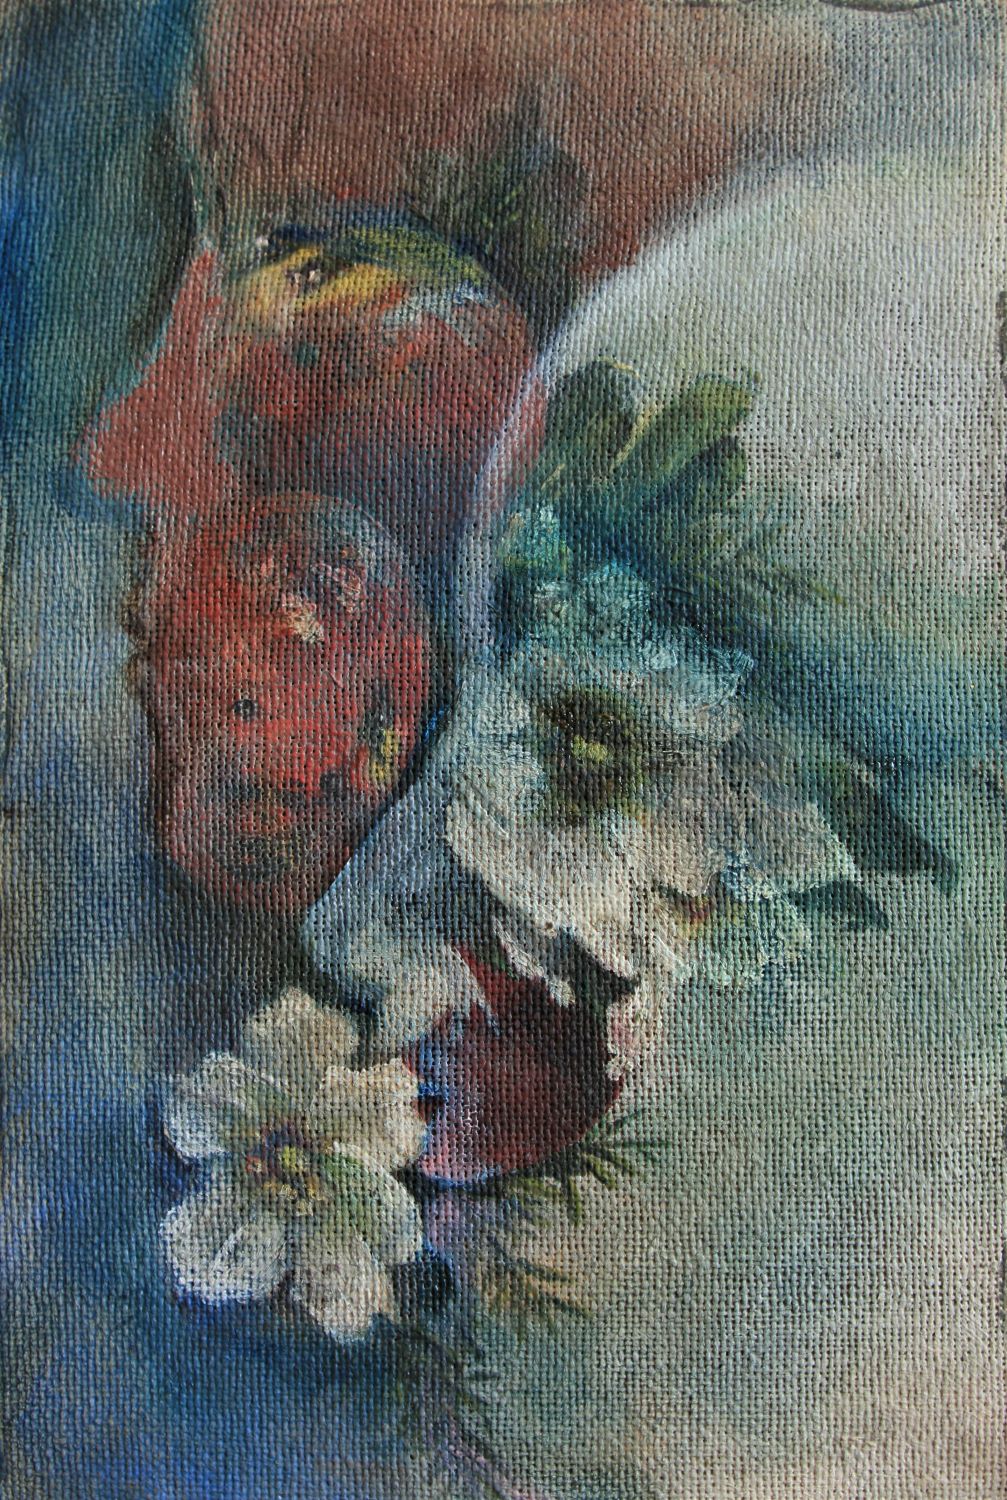 Virágportré III.